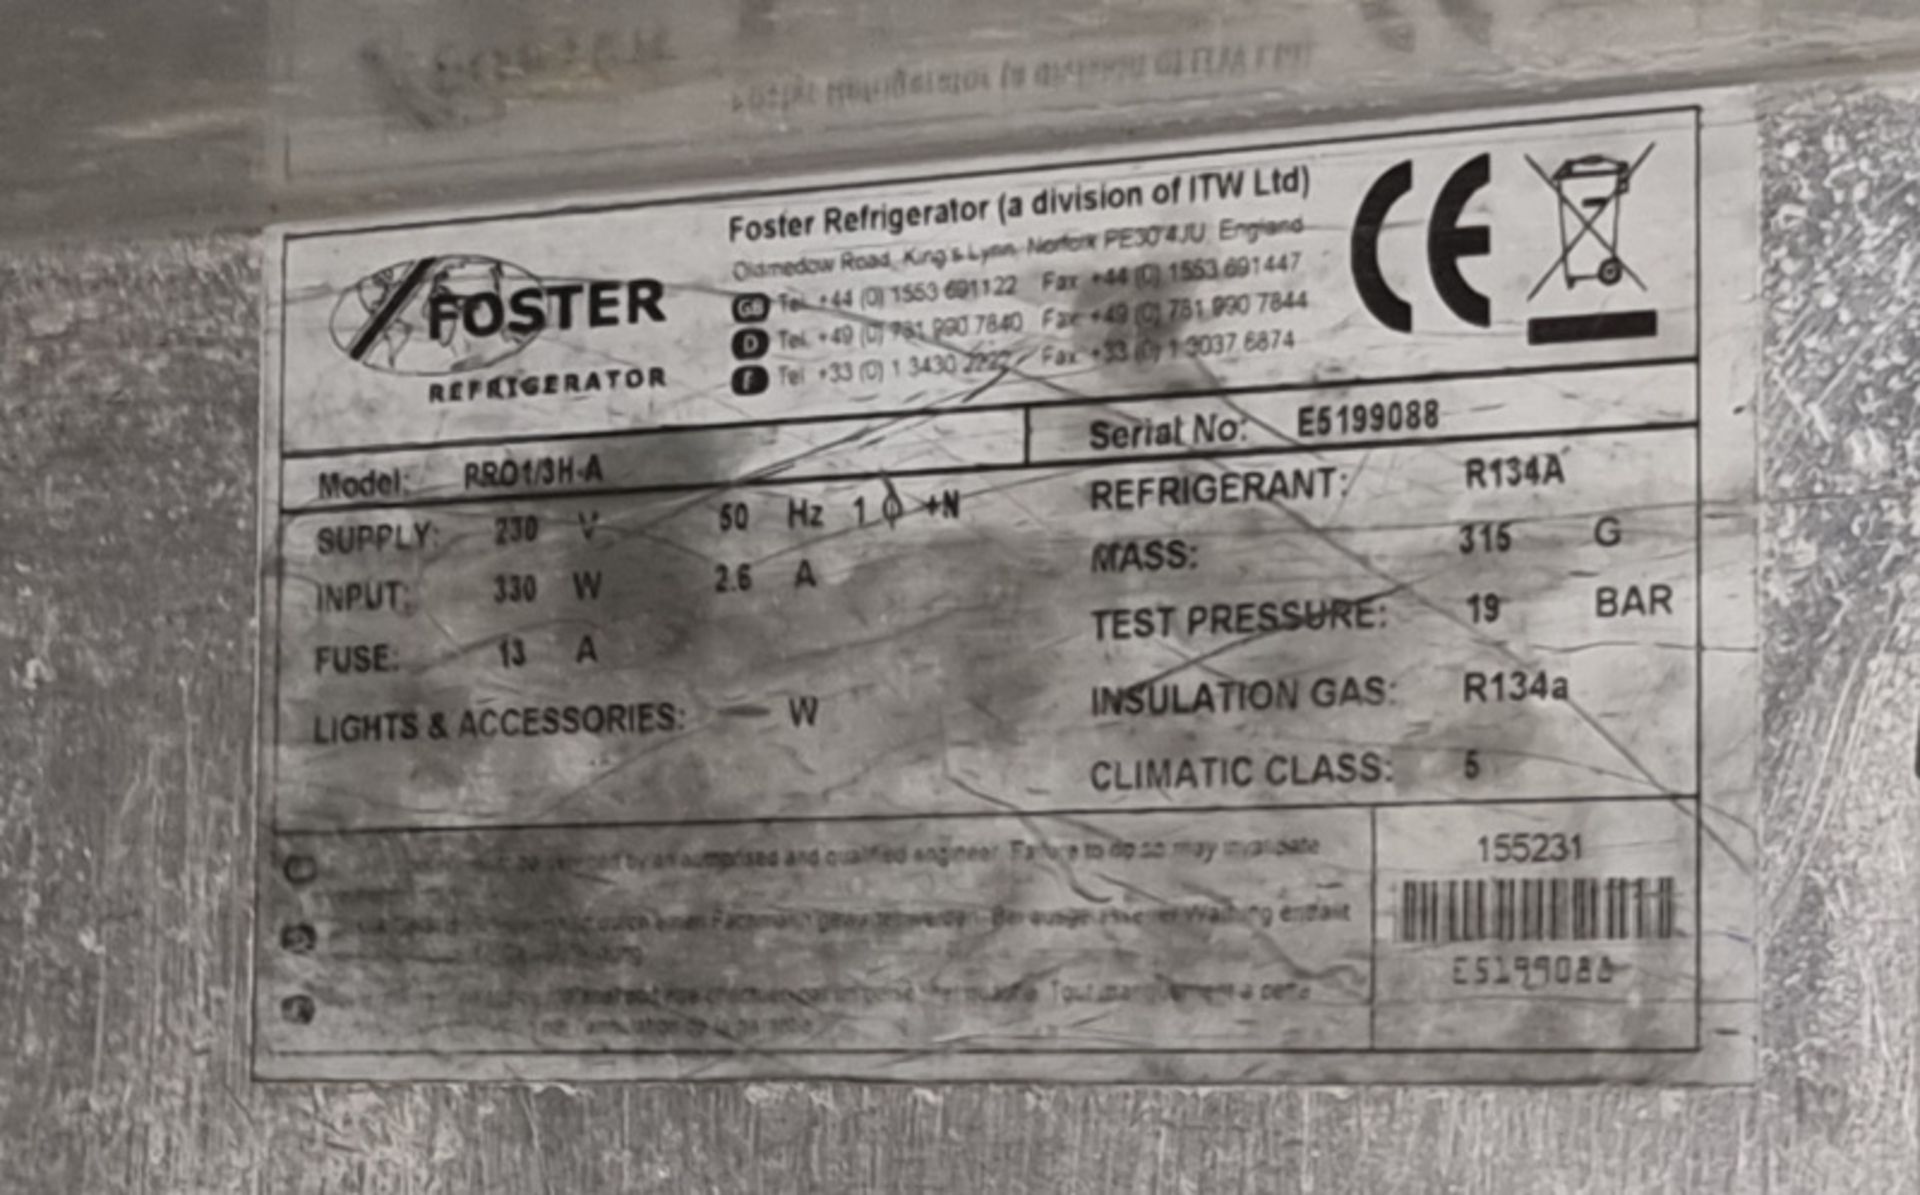 Foster Pro1/3H-A 3 door under counter fridge - 230V - 50Hz - Image 4 of 4